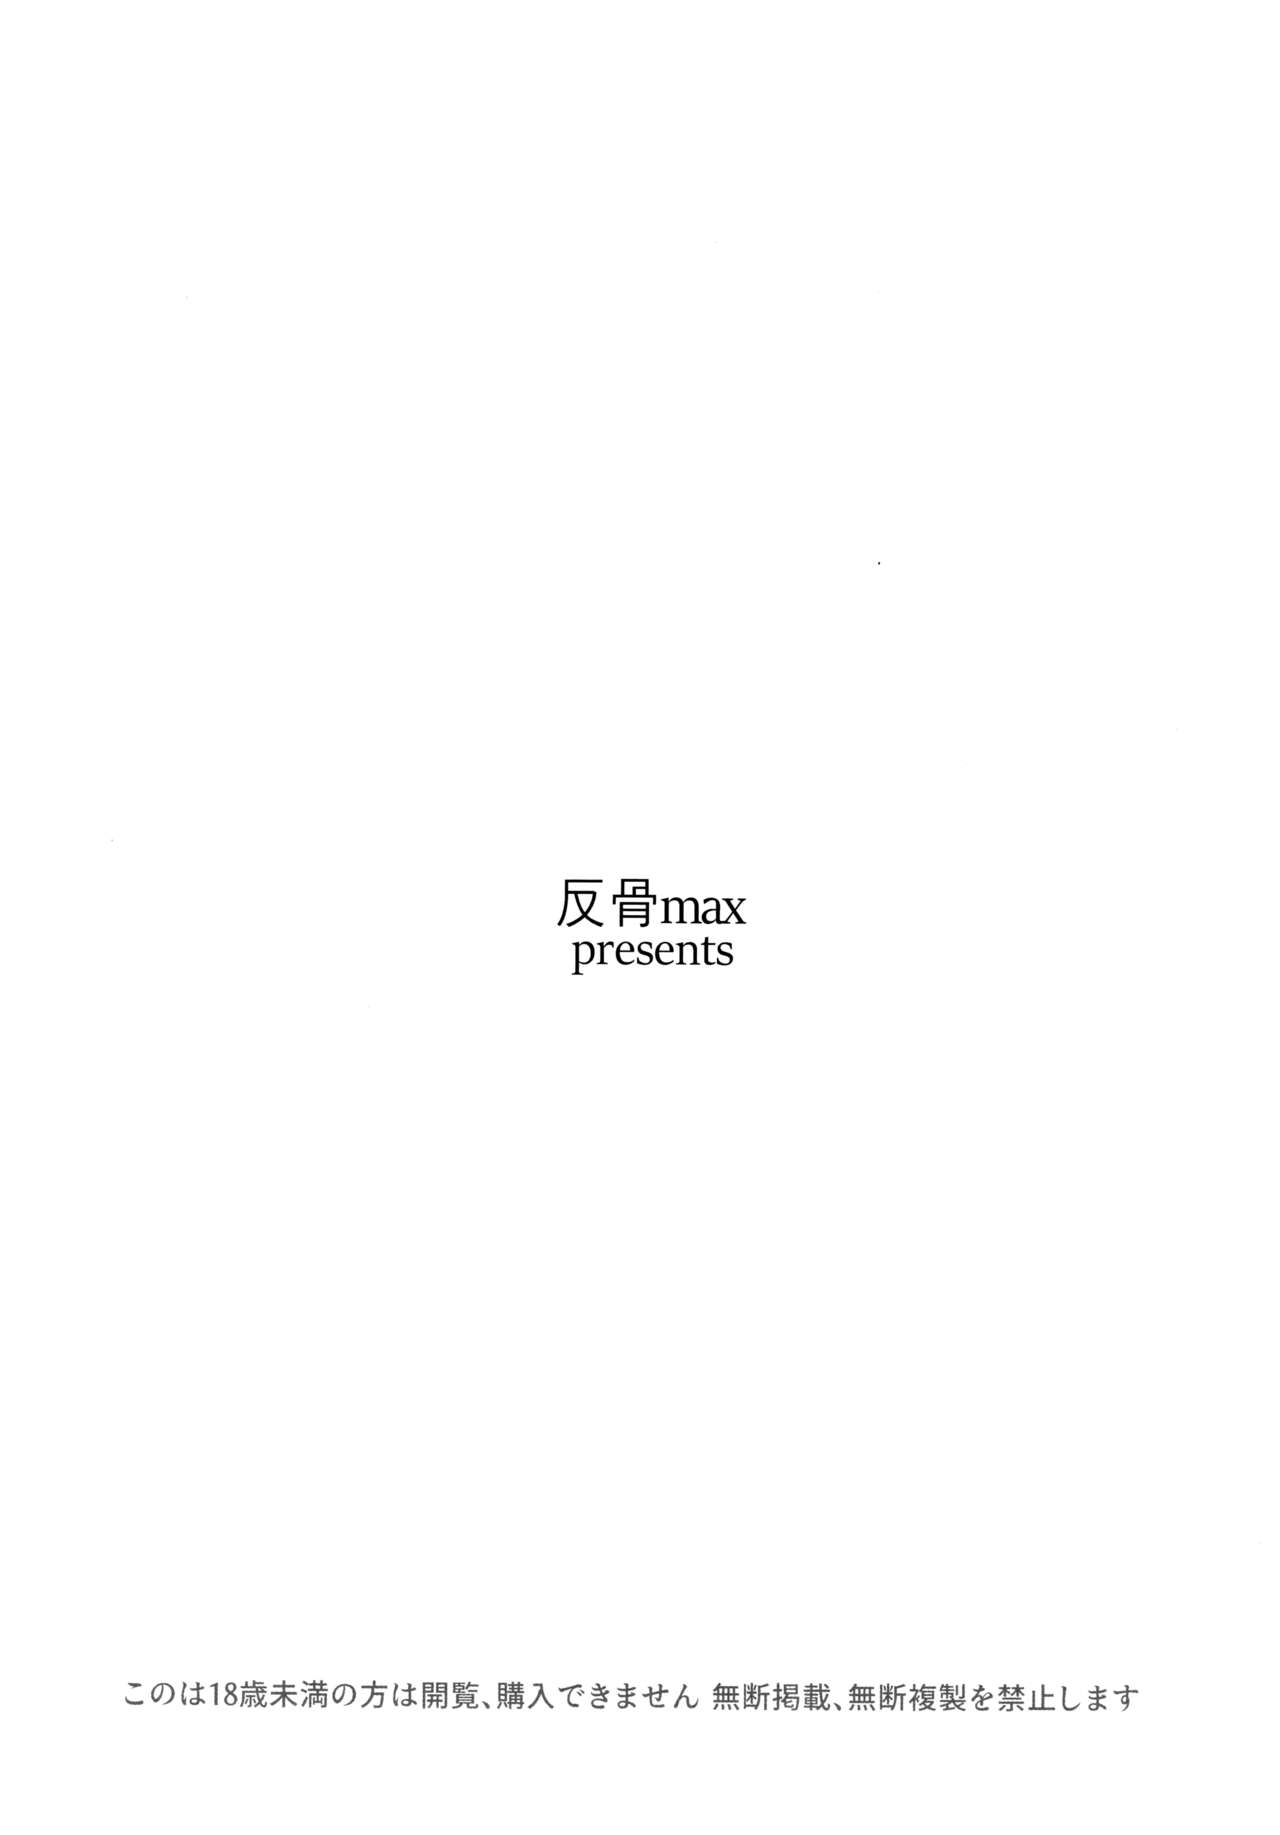 (C94) [SHIOHAMA (反骨max)] ERIKA vol.3 (ガールズ&パンツァー) [英訳]